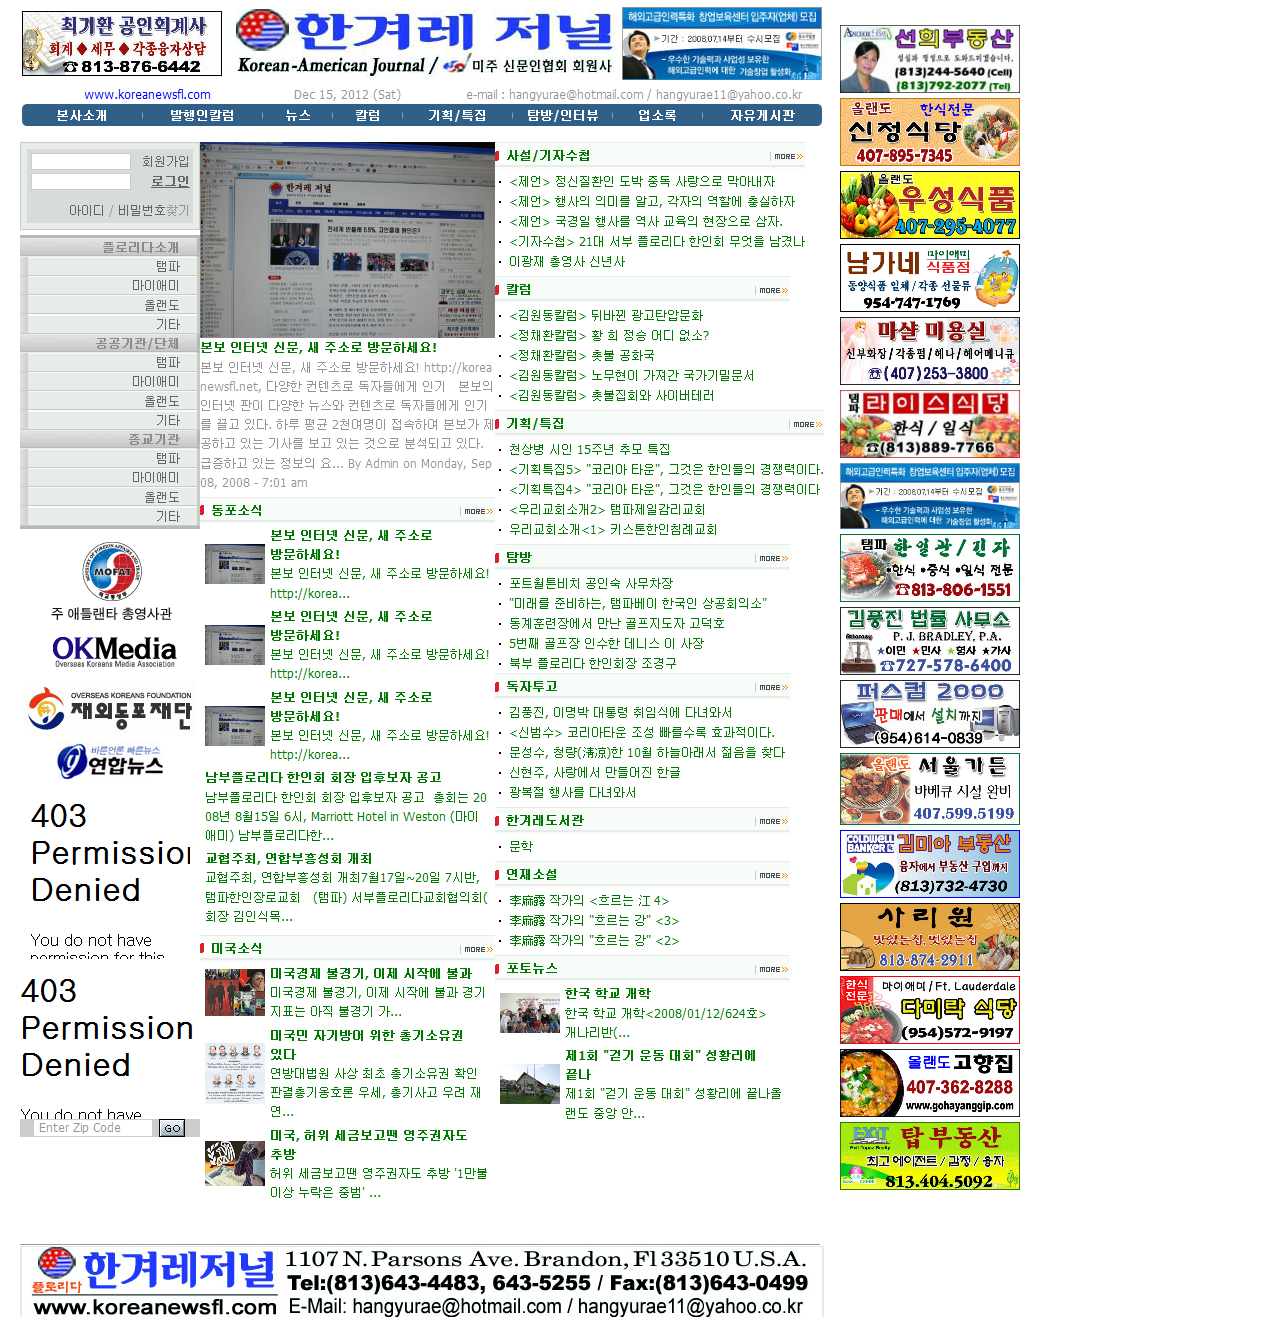 FireShot Screen Capture #335 - '__ 한겨레저널 - 플로리다__' - koreanewsfl_bkihost2_com.png